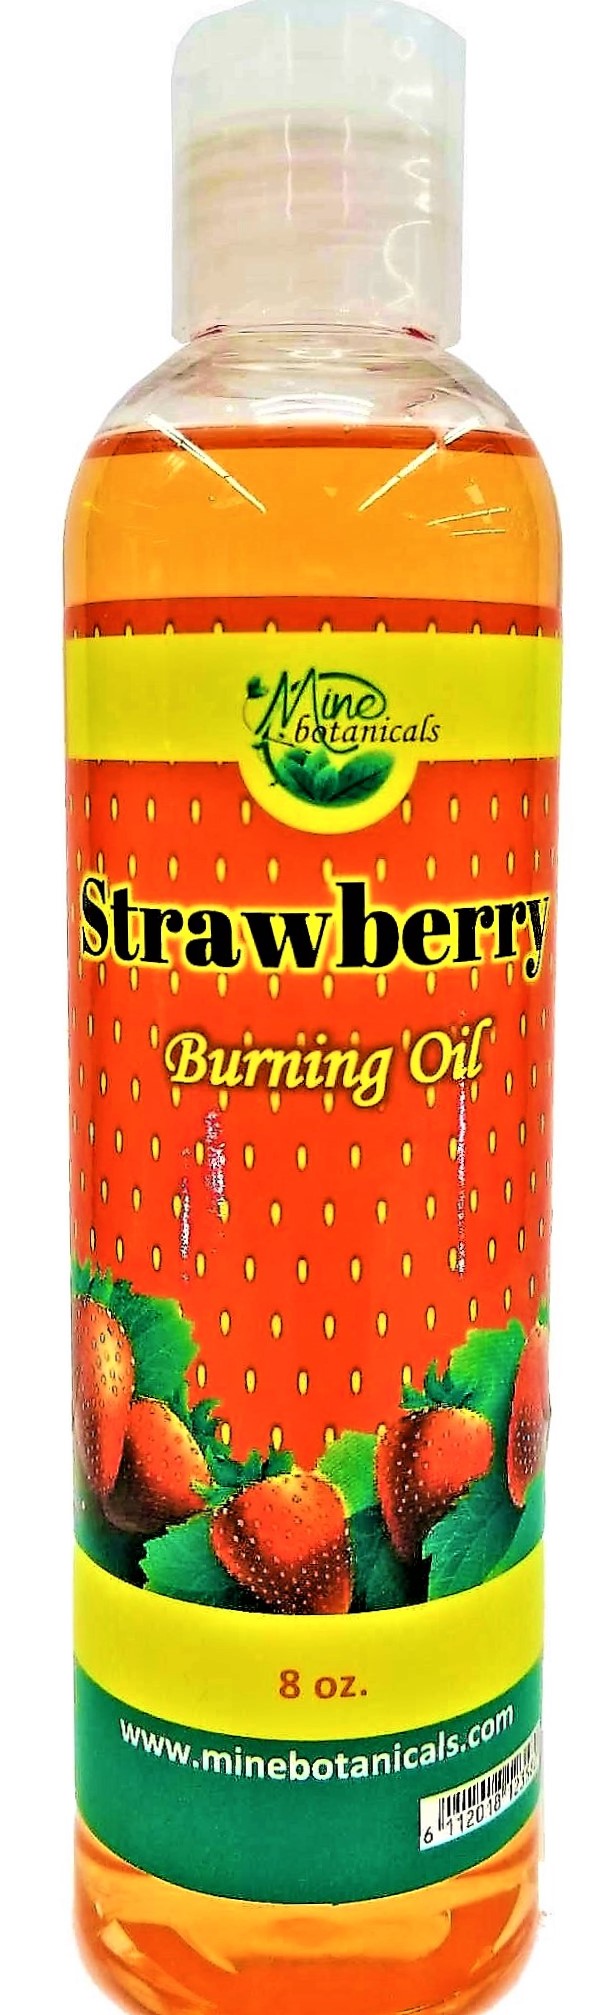 Strawberry Burning Oil